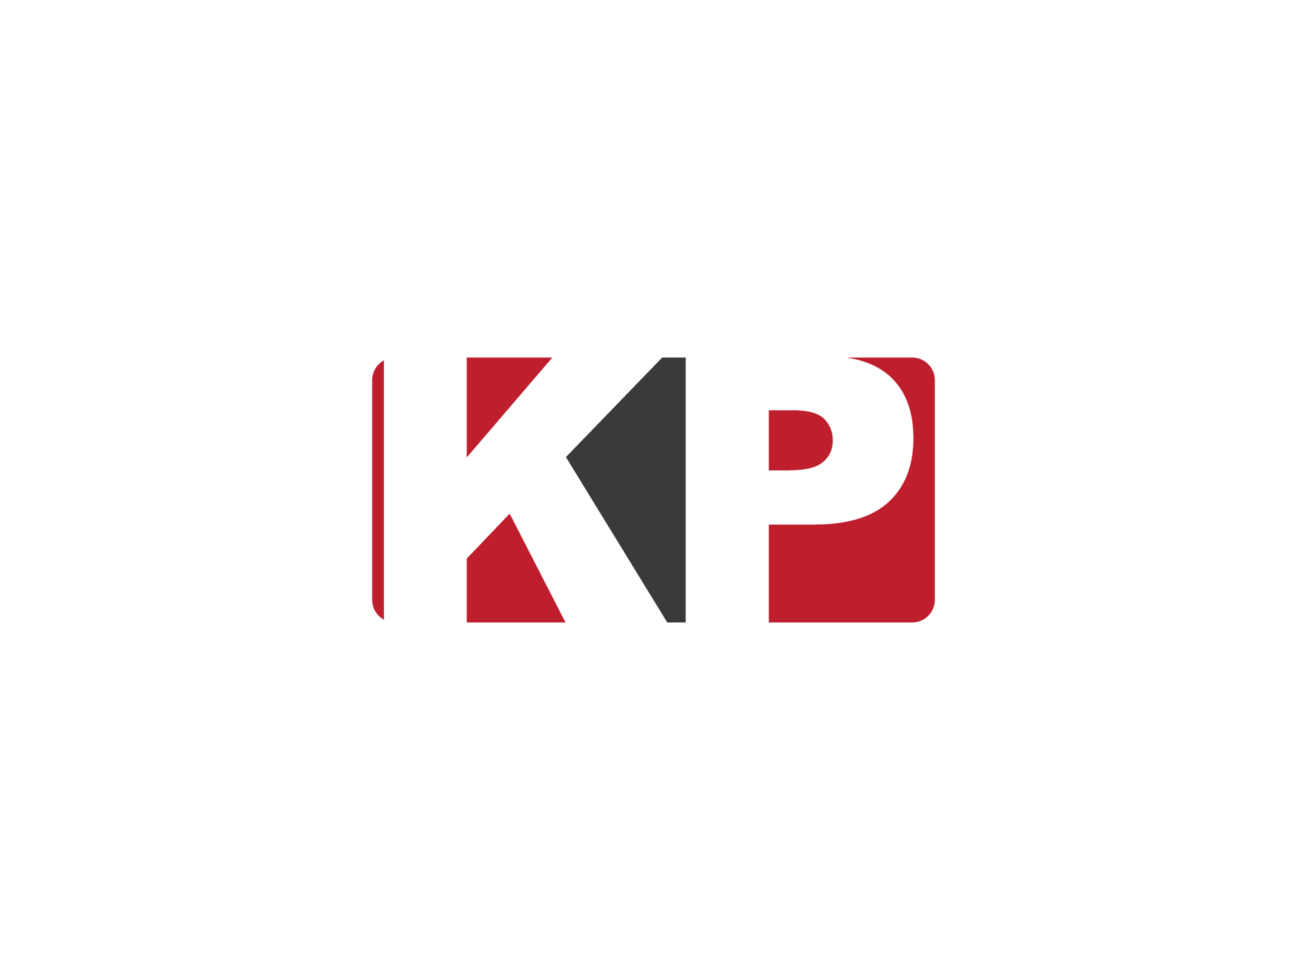 eleganta png form kp brev logotyp, typografi fyrkant kp logotyp ikon vektor konst